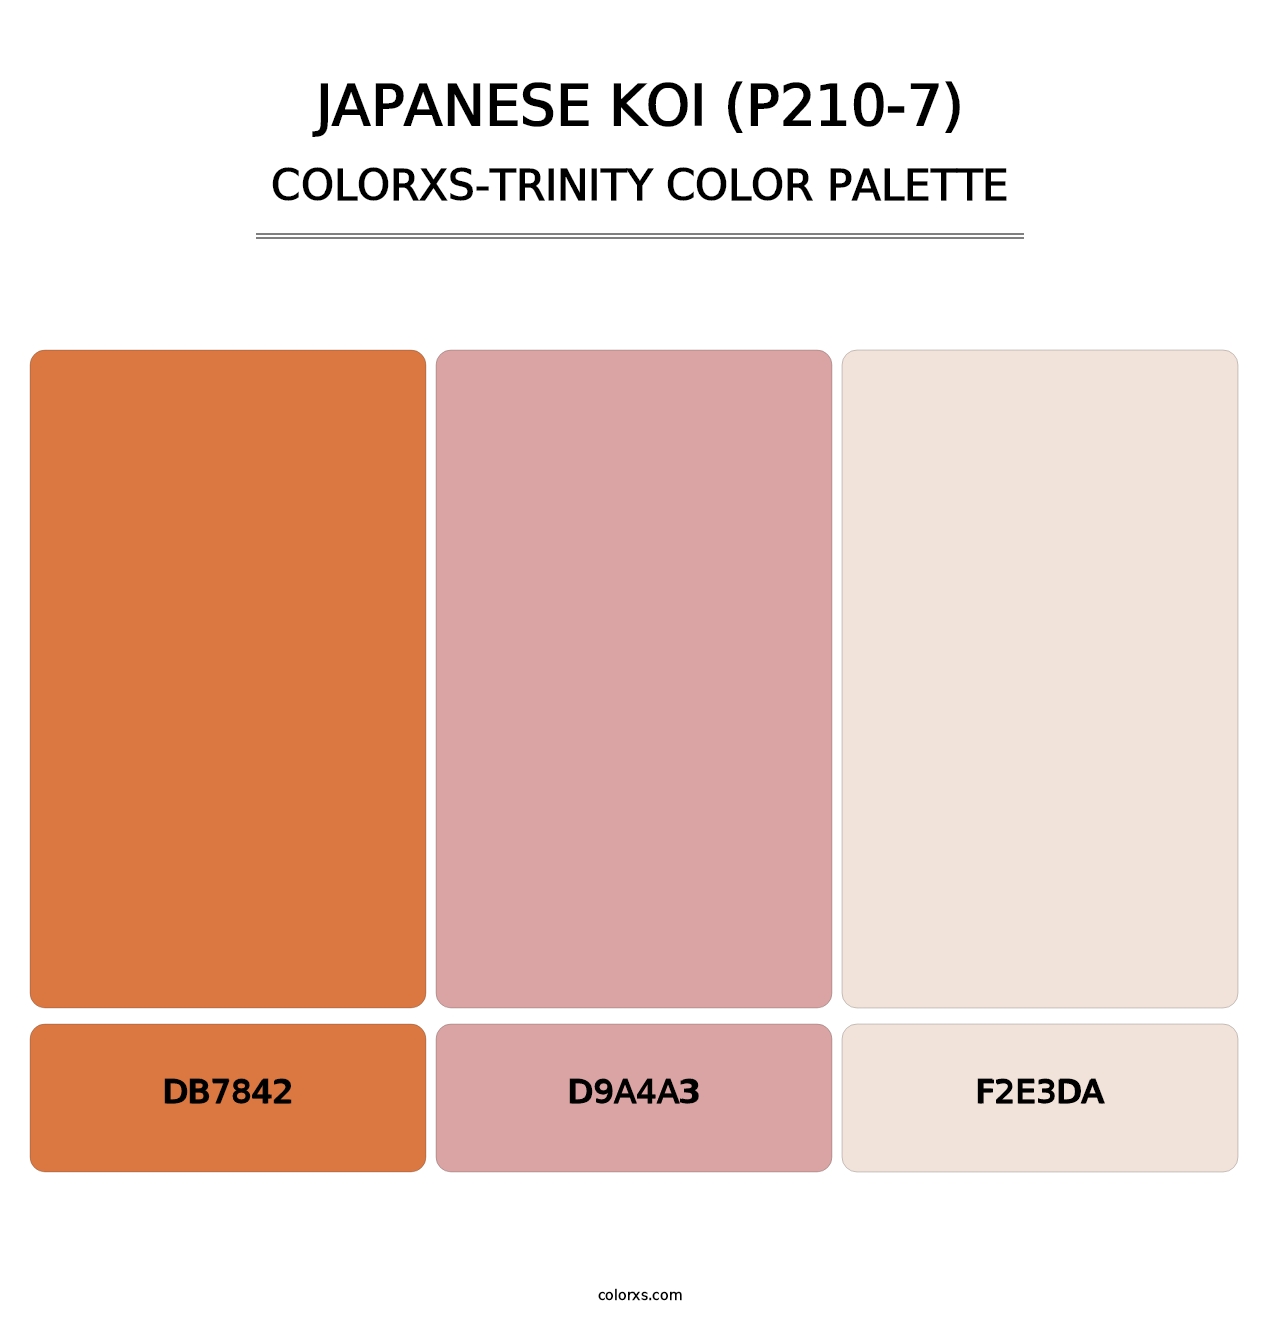 Japanese Koi (P210-7) - Colorxs Trinity Palette